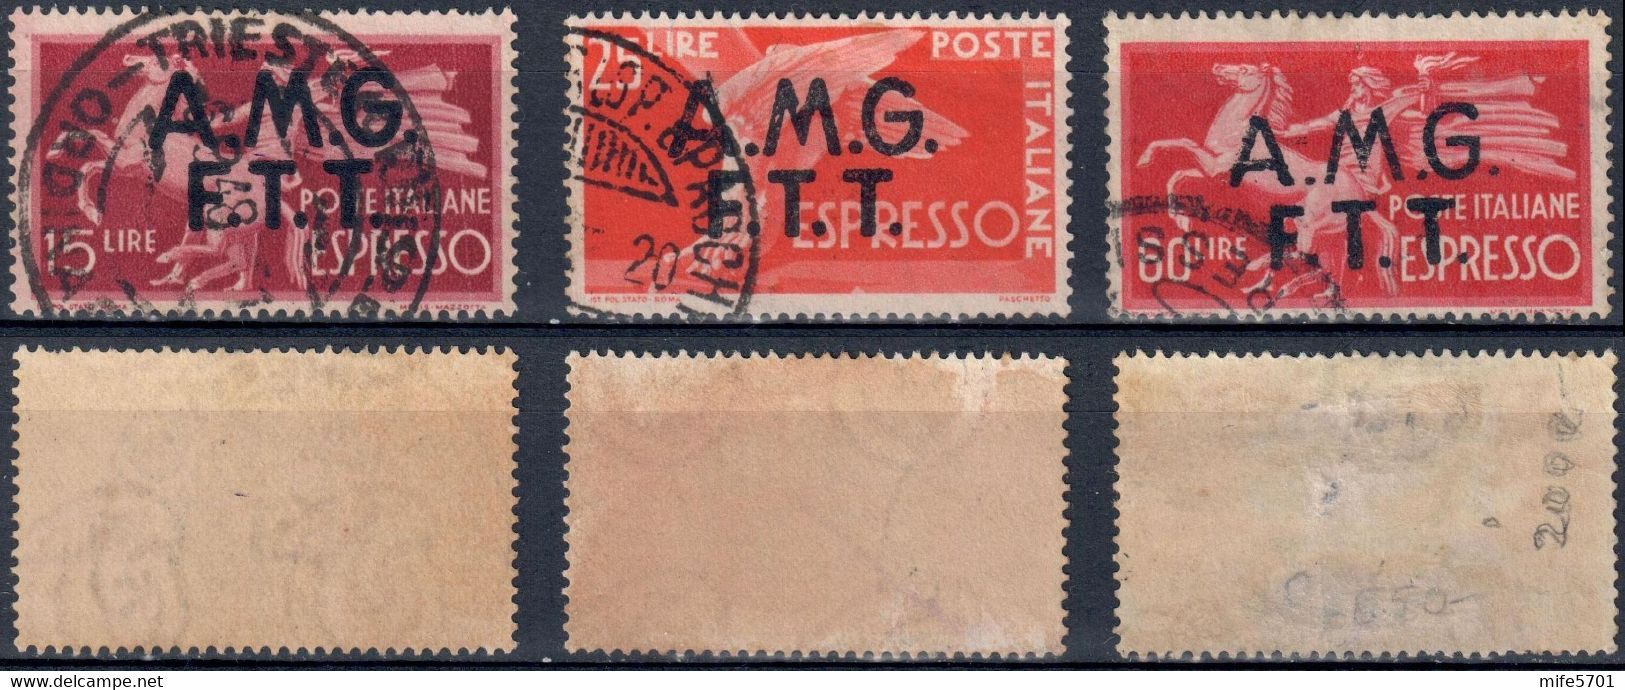 AMG-FTT 1947/48 - ESPRESSI SERIE DEMOCRATICA L. 15 / 25 / 60 SOPRASTAMPA SU DUE RIGHE - USATI - USED ⦿ - SASSONE 1/2/4 - Express Mail